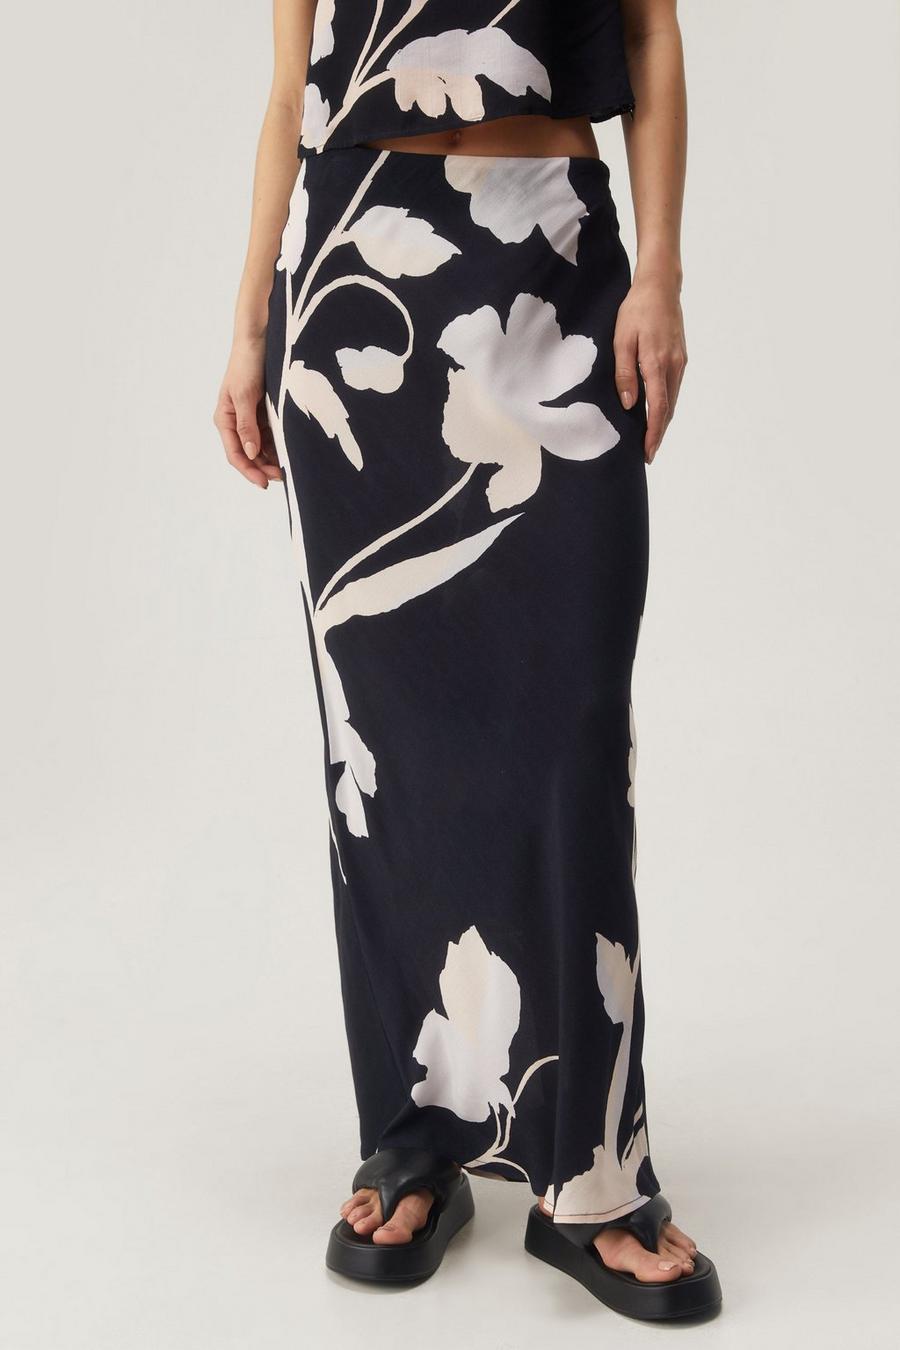 Floral Monochrome Maxi Skirt